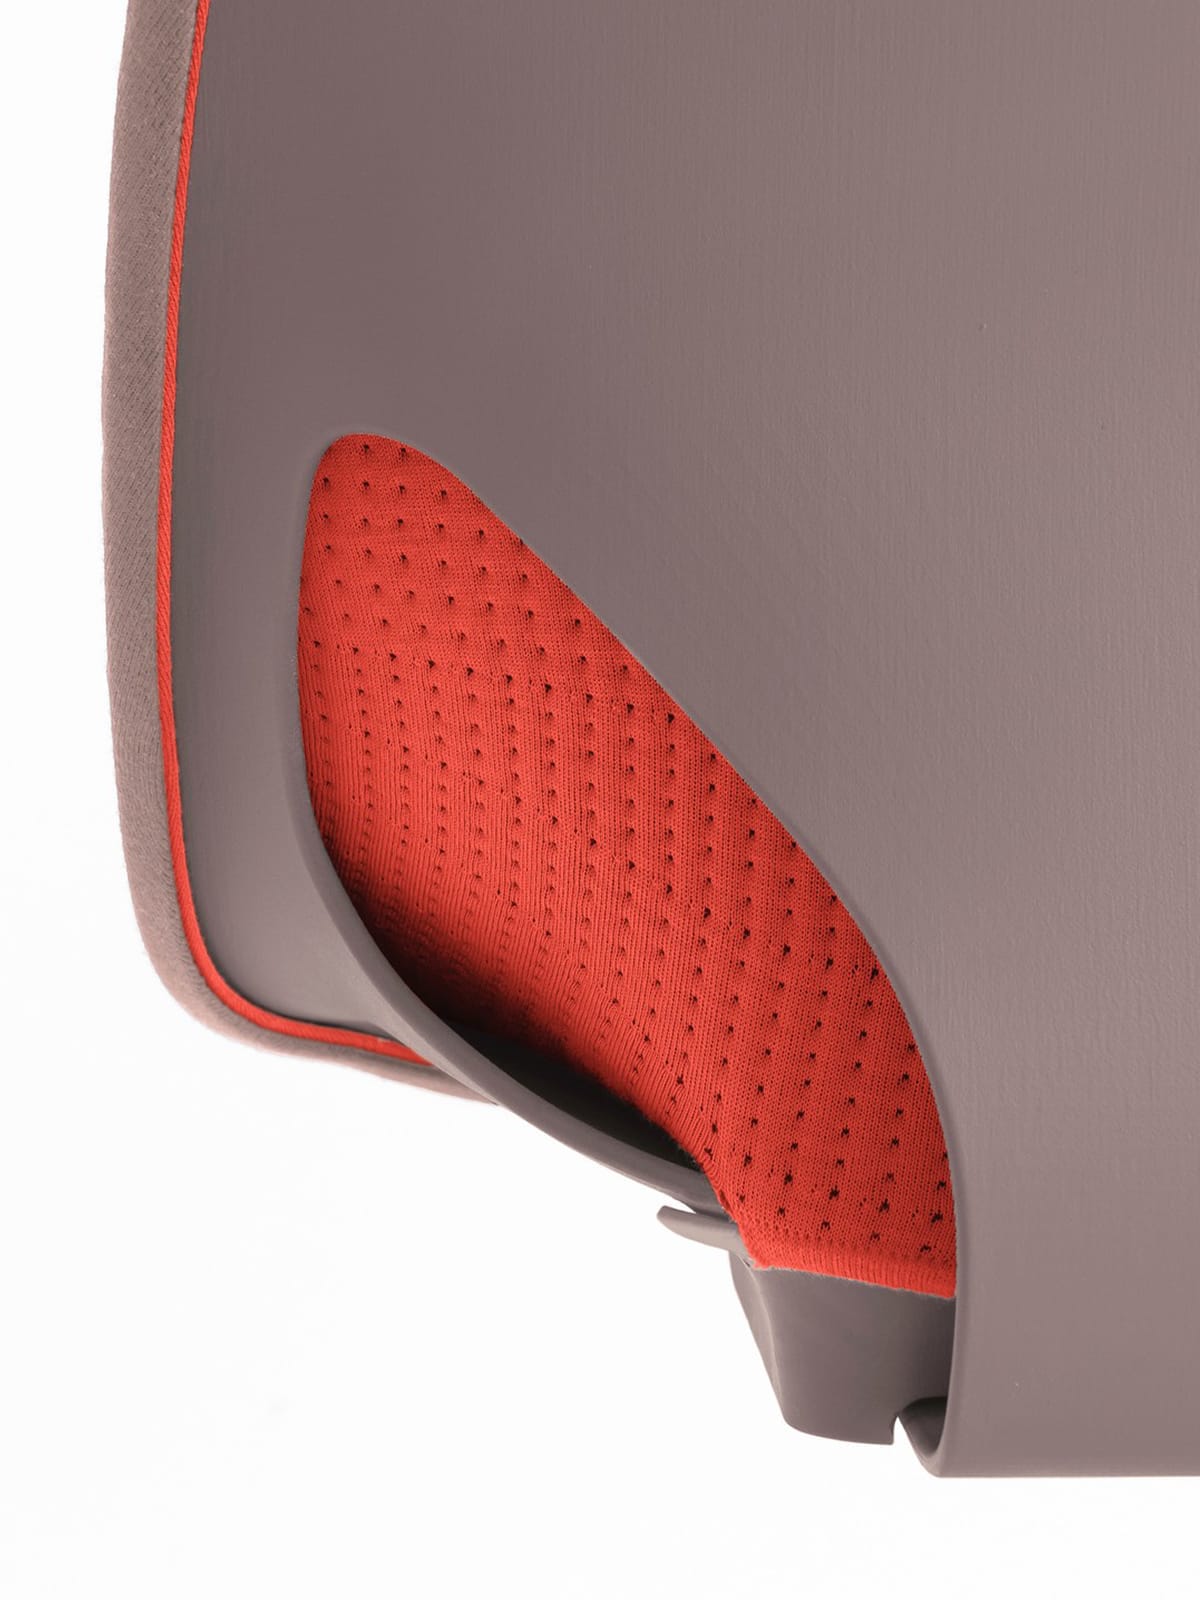 Zeph-Chair-Herman-Miller-3D-Knit-Seatpad-attachment-detail